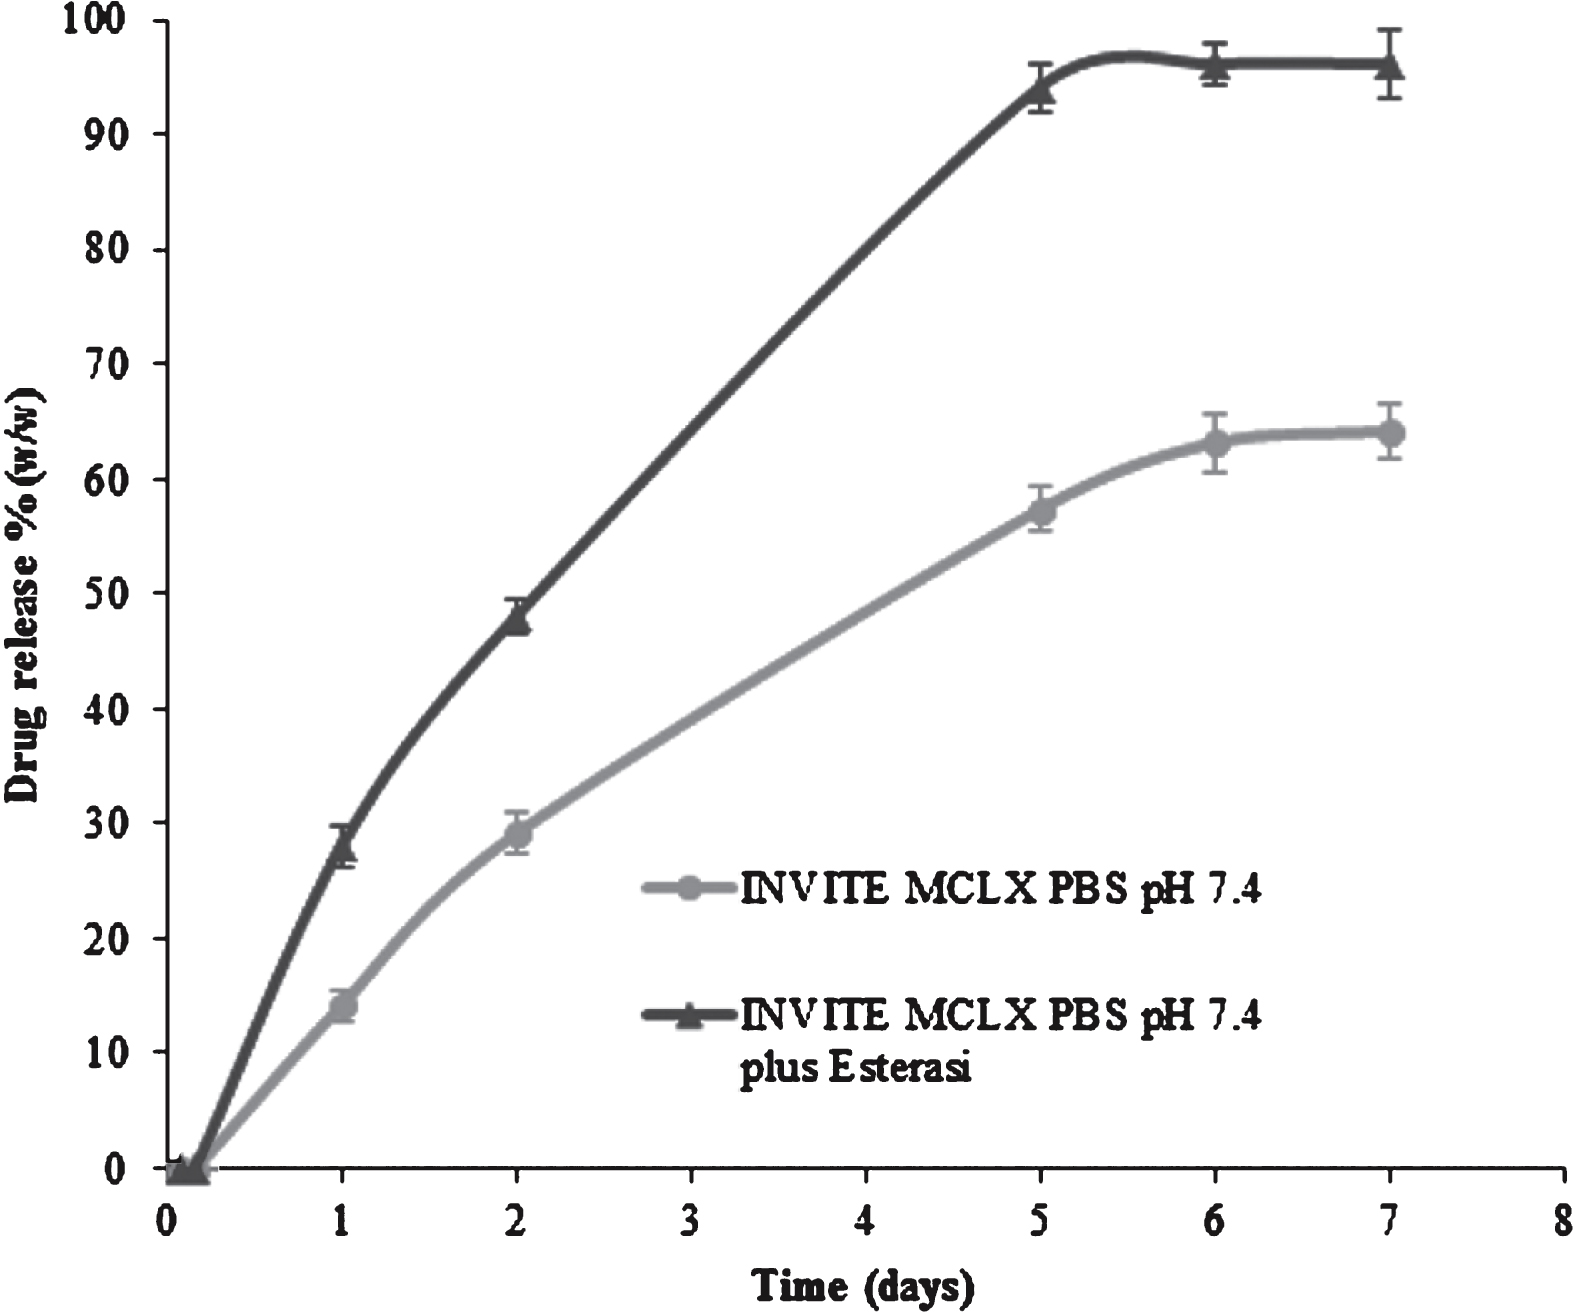 Cumulative release of CLX from INVITE MCLX at 37°C in PBS pH 7.4 or in PBS pH 7.4 plus esterase.